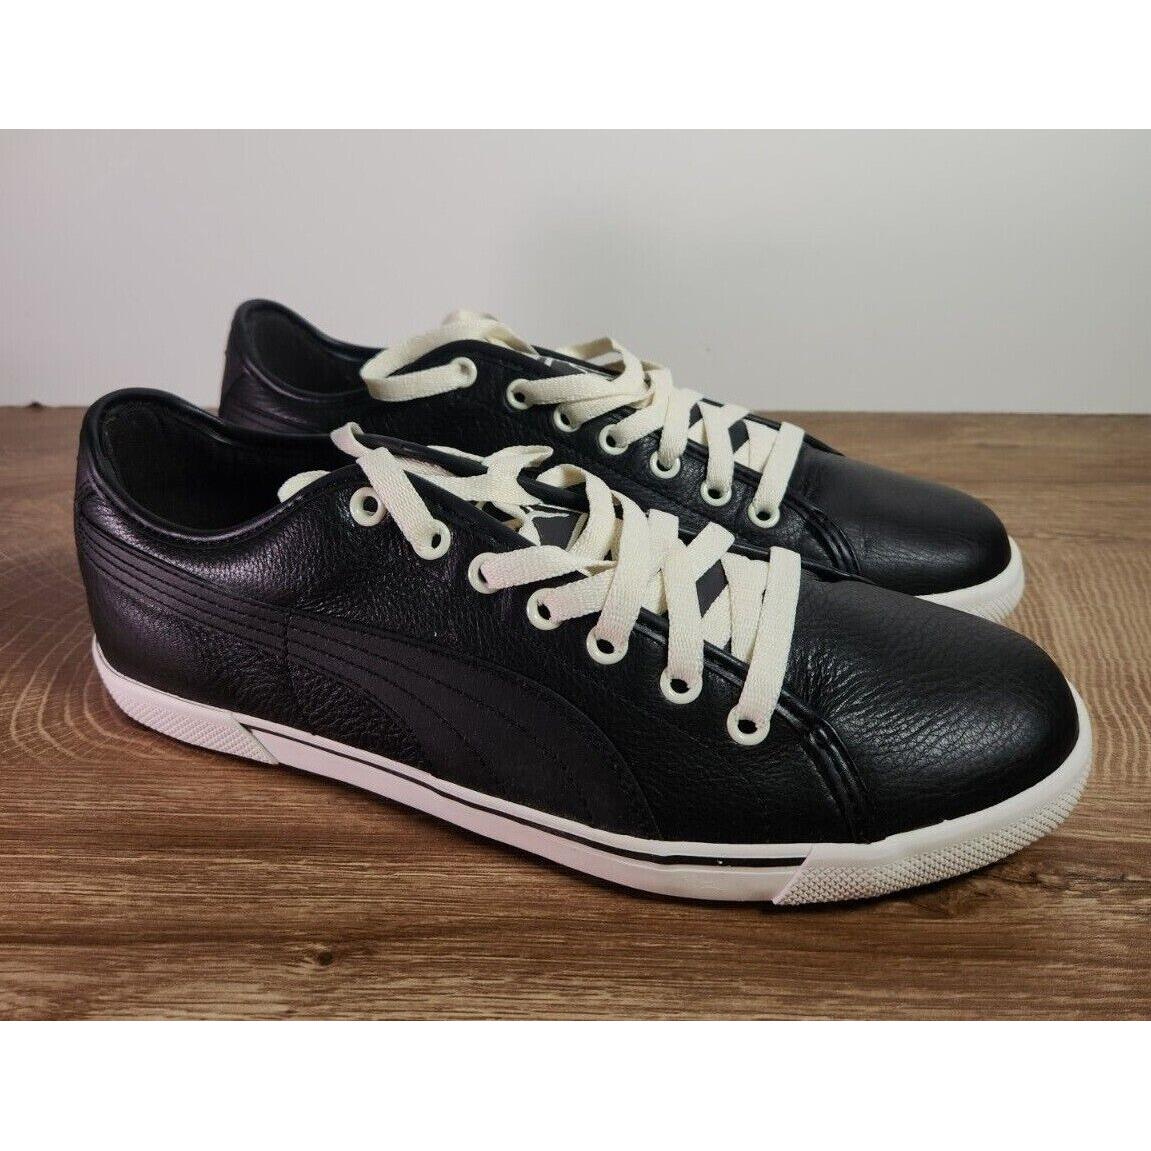 Puma Shoes Mens Size 9 Benecio Track Running Sneakers Lace Up | 051211308140 - Puma shoes Benecio - Black | SporTipTop